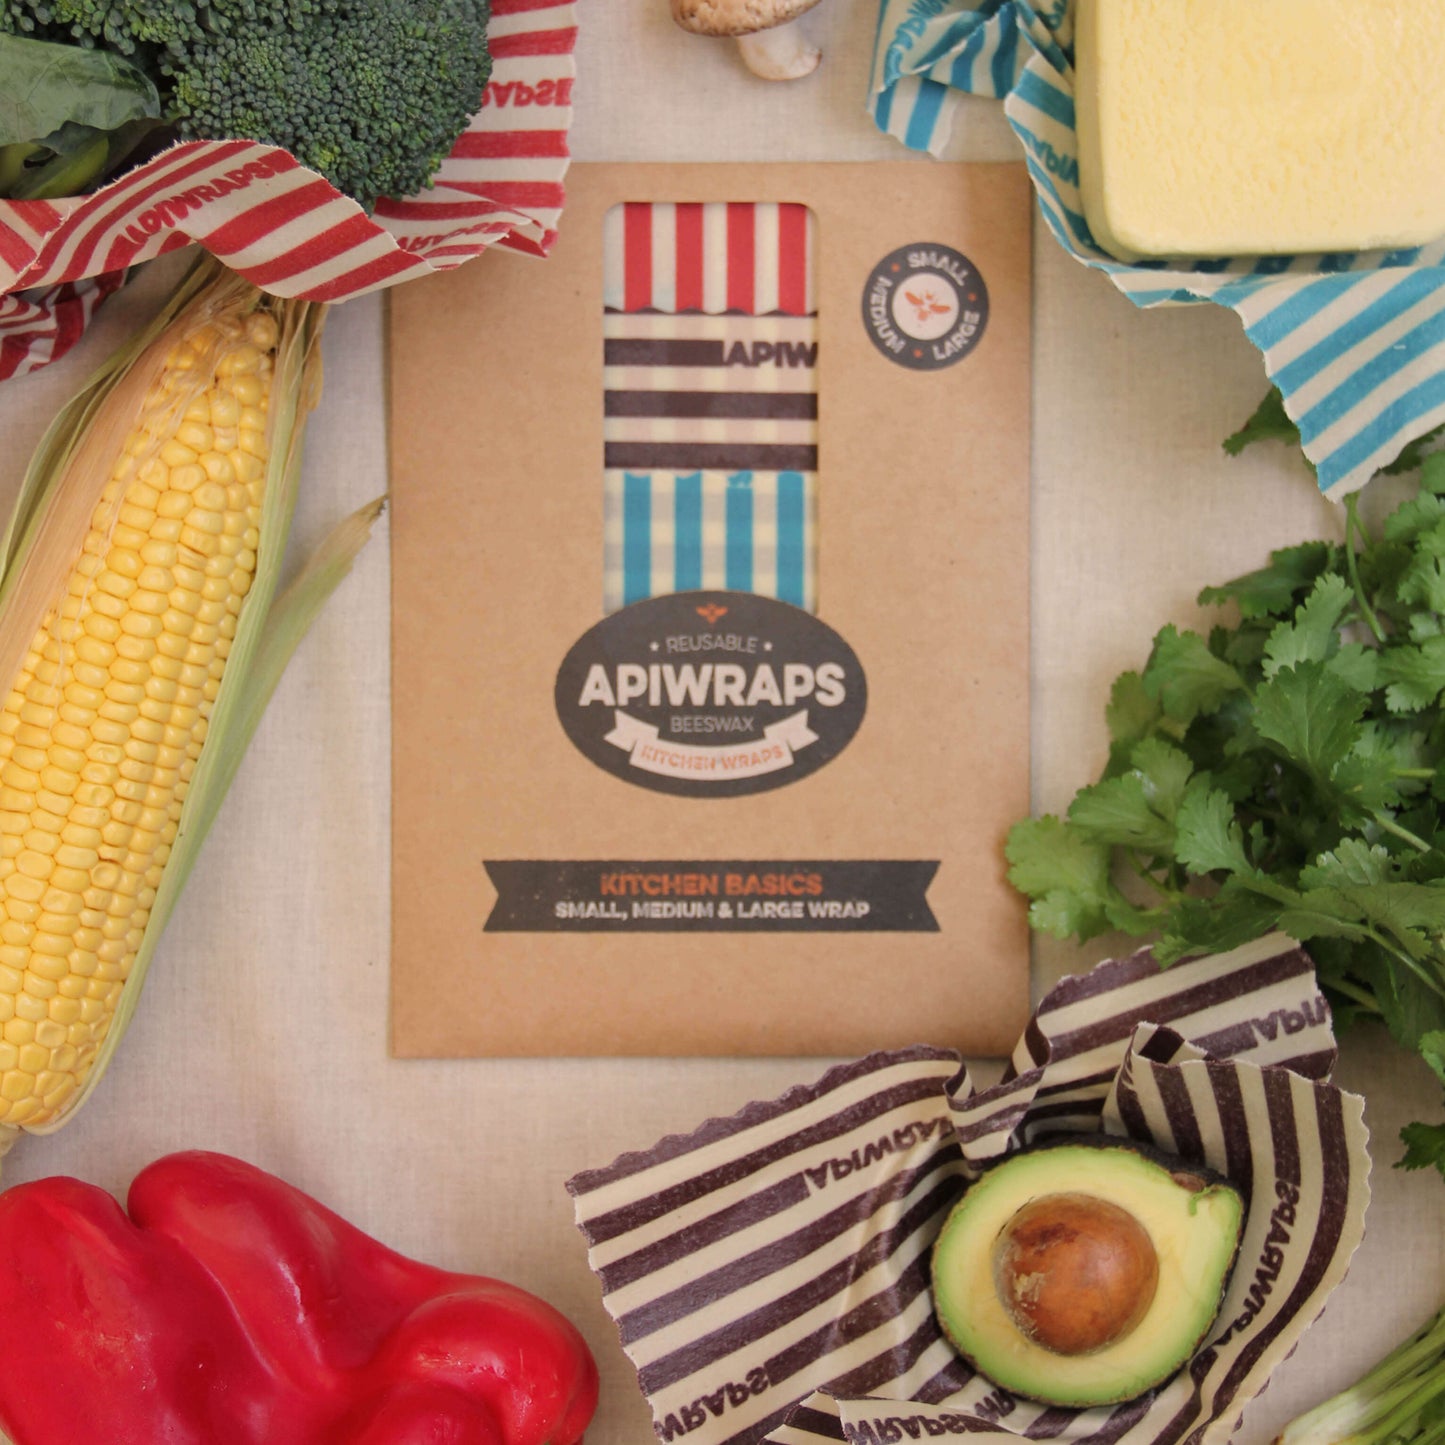 Apiwraps Reusable Beeswax Wraps, Kitchen Basics Wrap, Contains One Large, One Medium & One Small Wrap